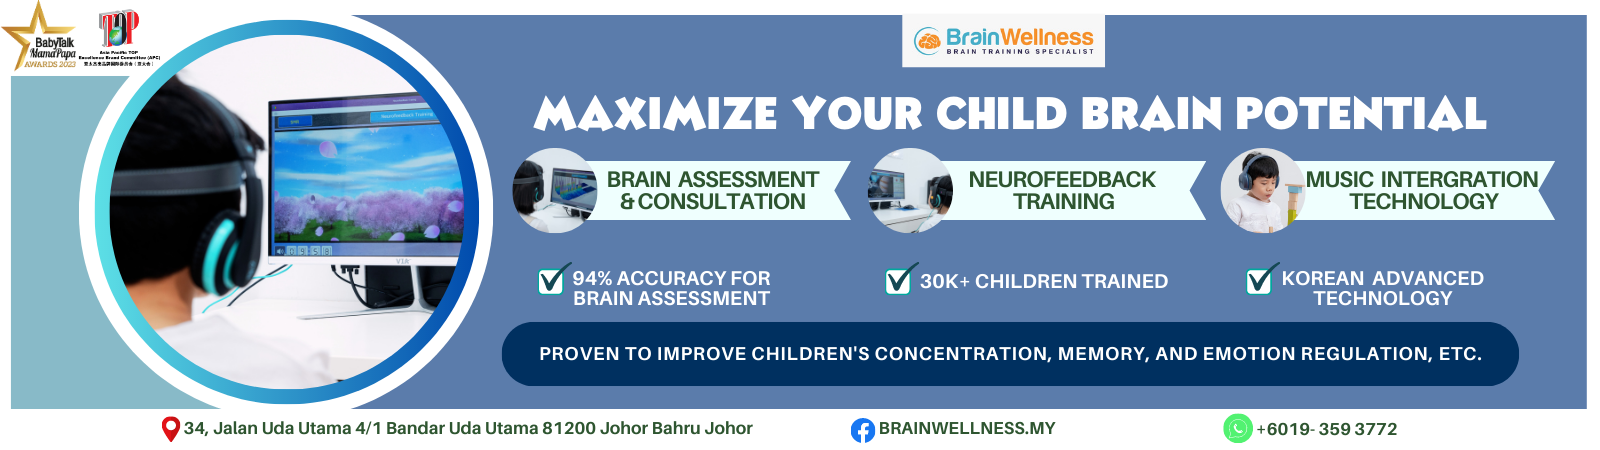 BrainWellness Brain Training Centre: Empowering Children’s Cognitive Abilities